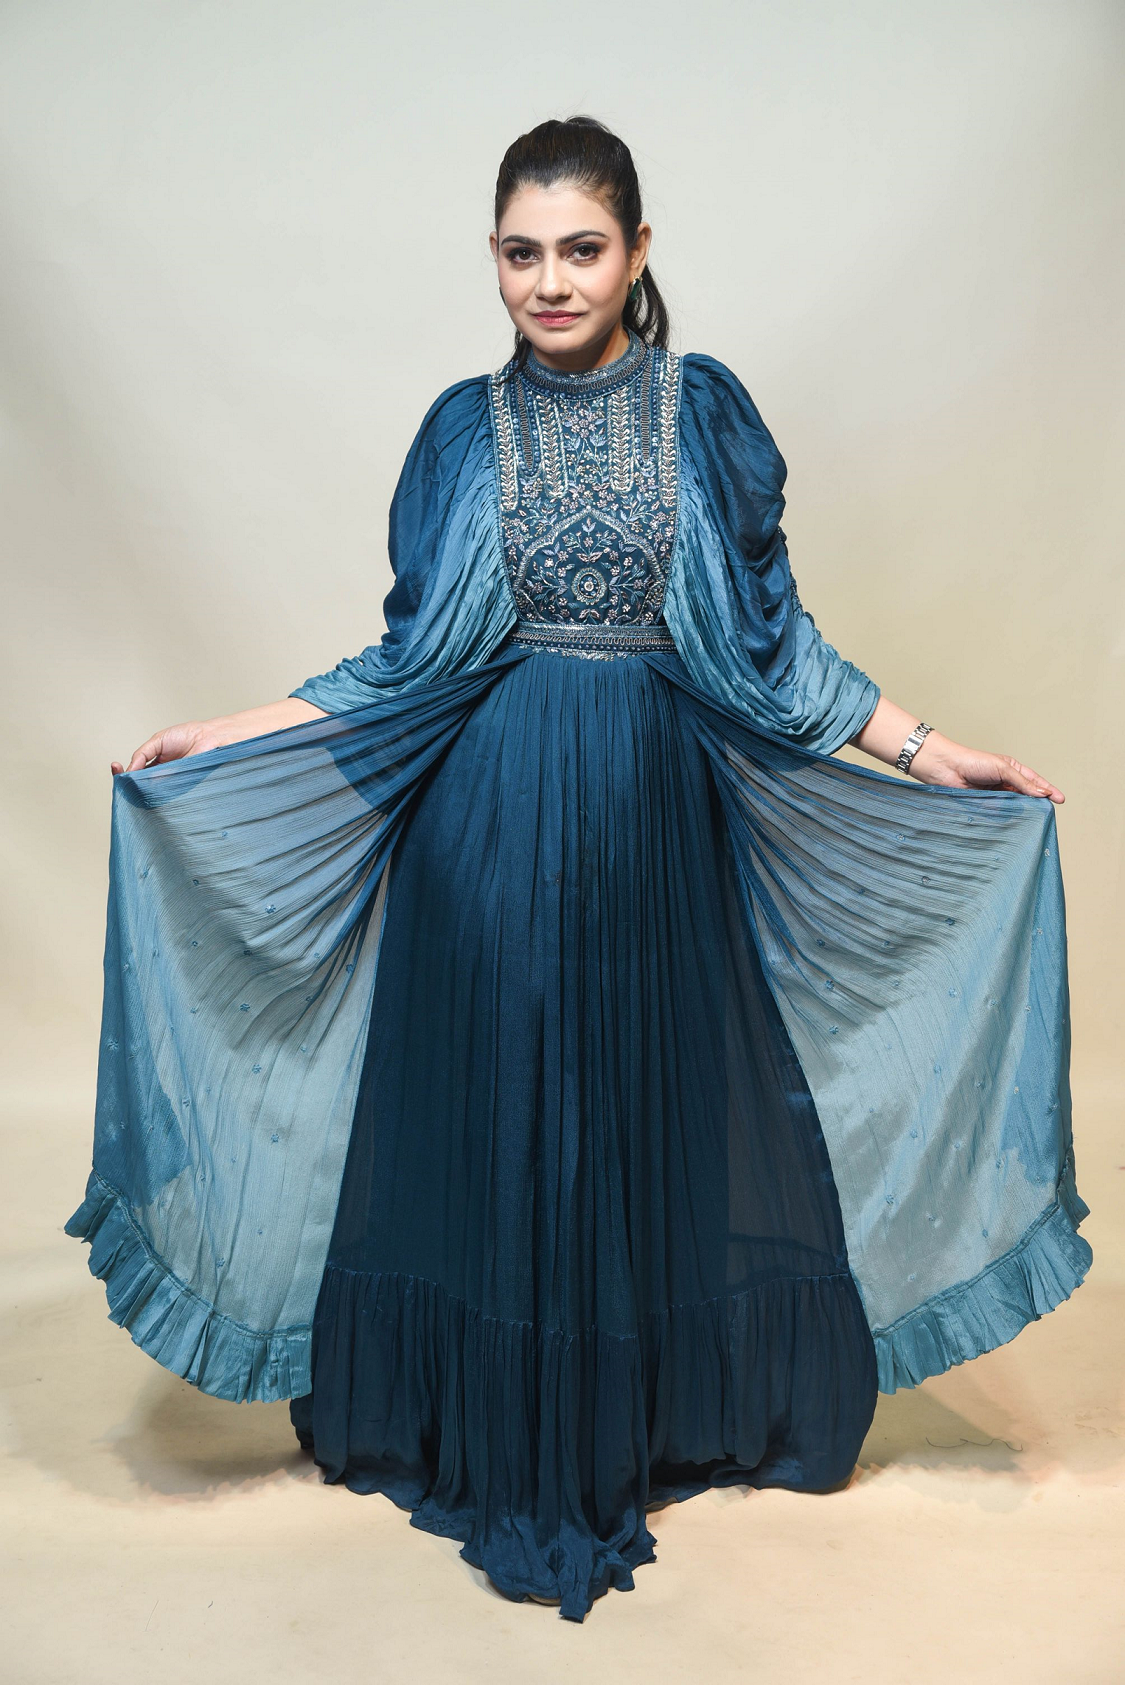 Woman in Blue Floral Motif Dress